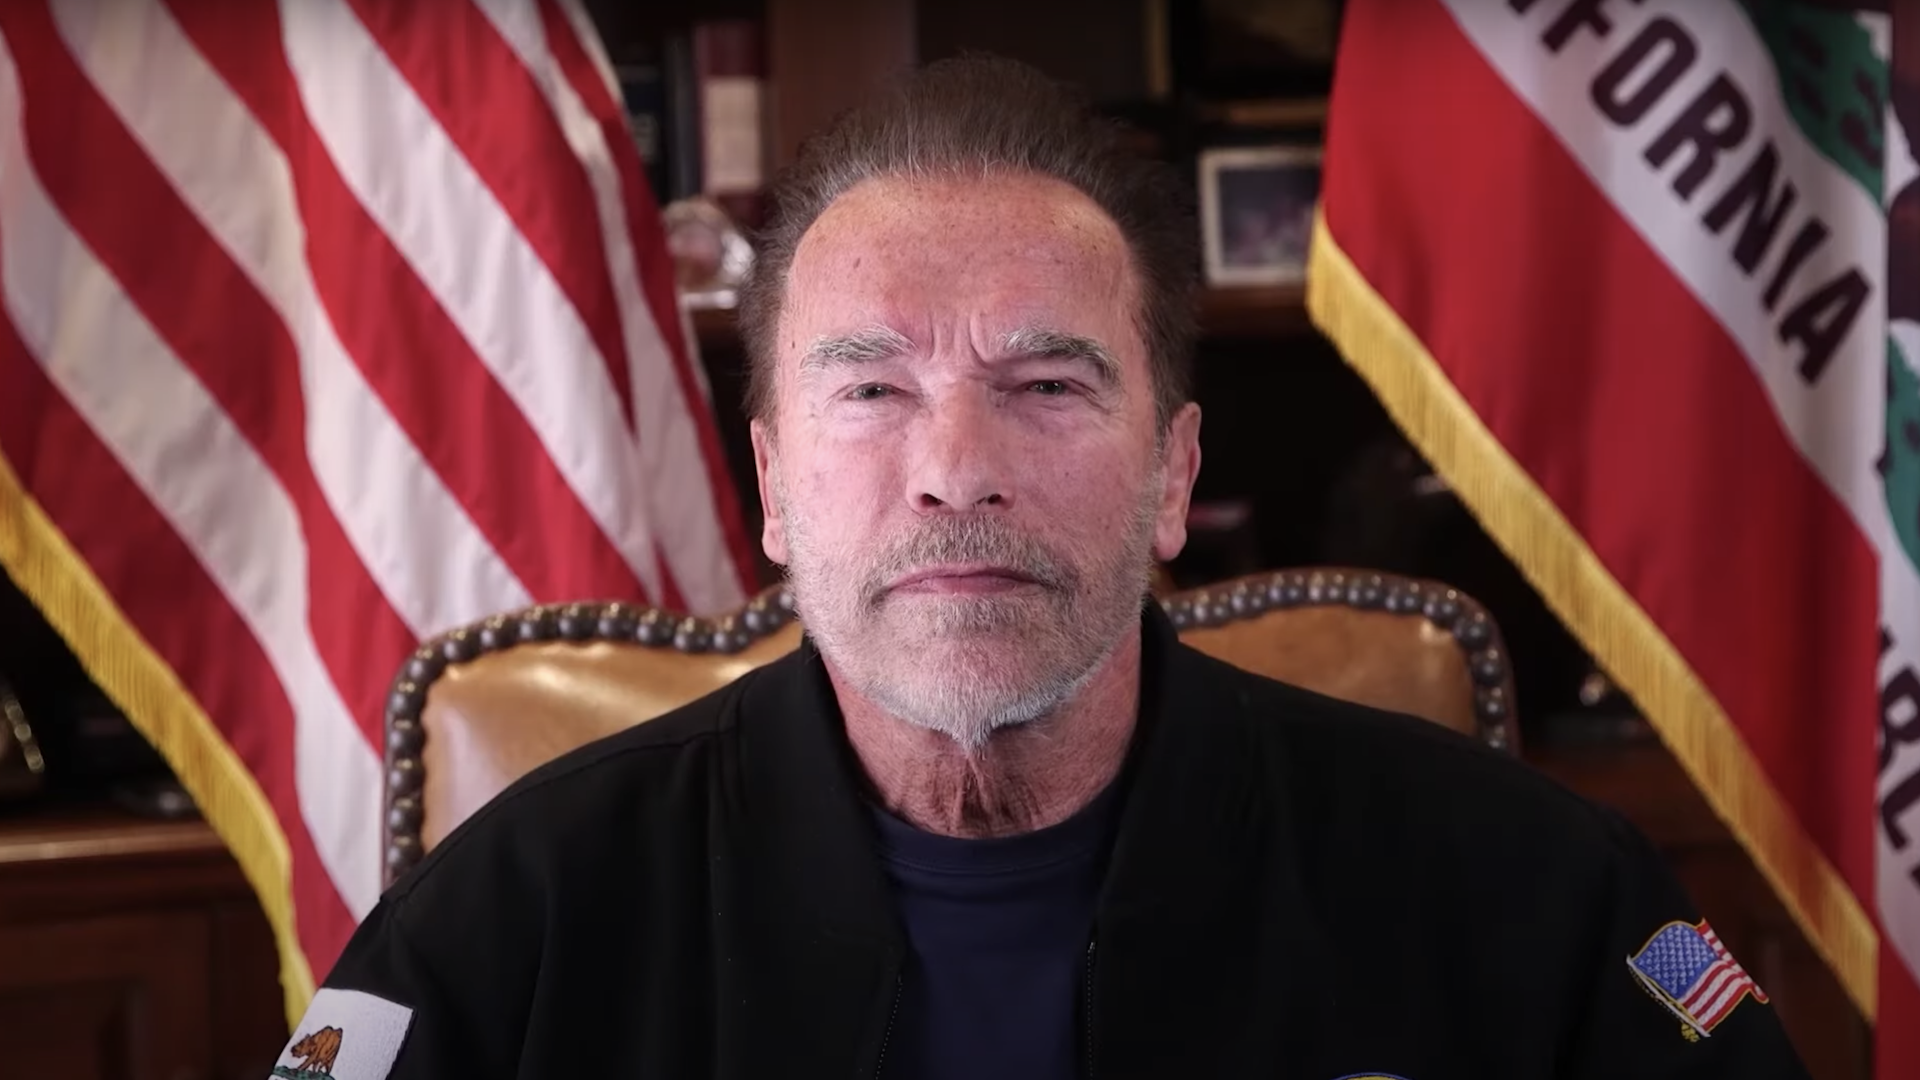 Arnold Schwarzenegger giving a speech in front of an American and Californian flag